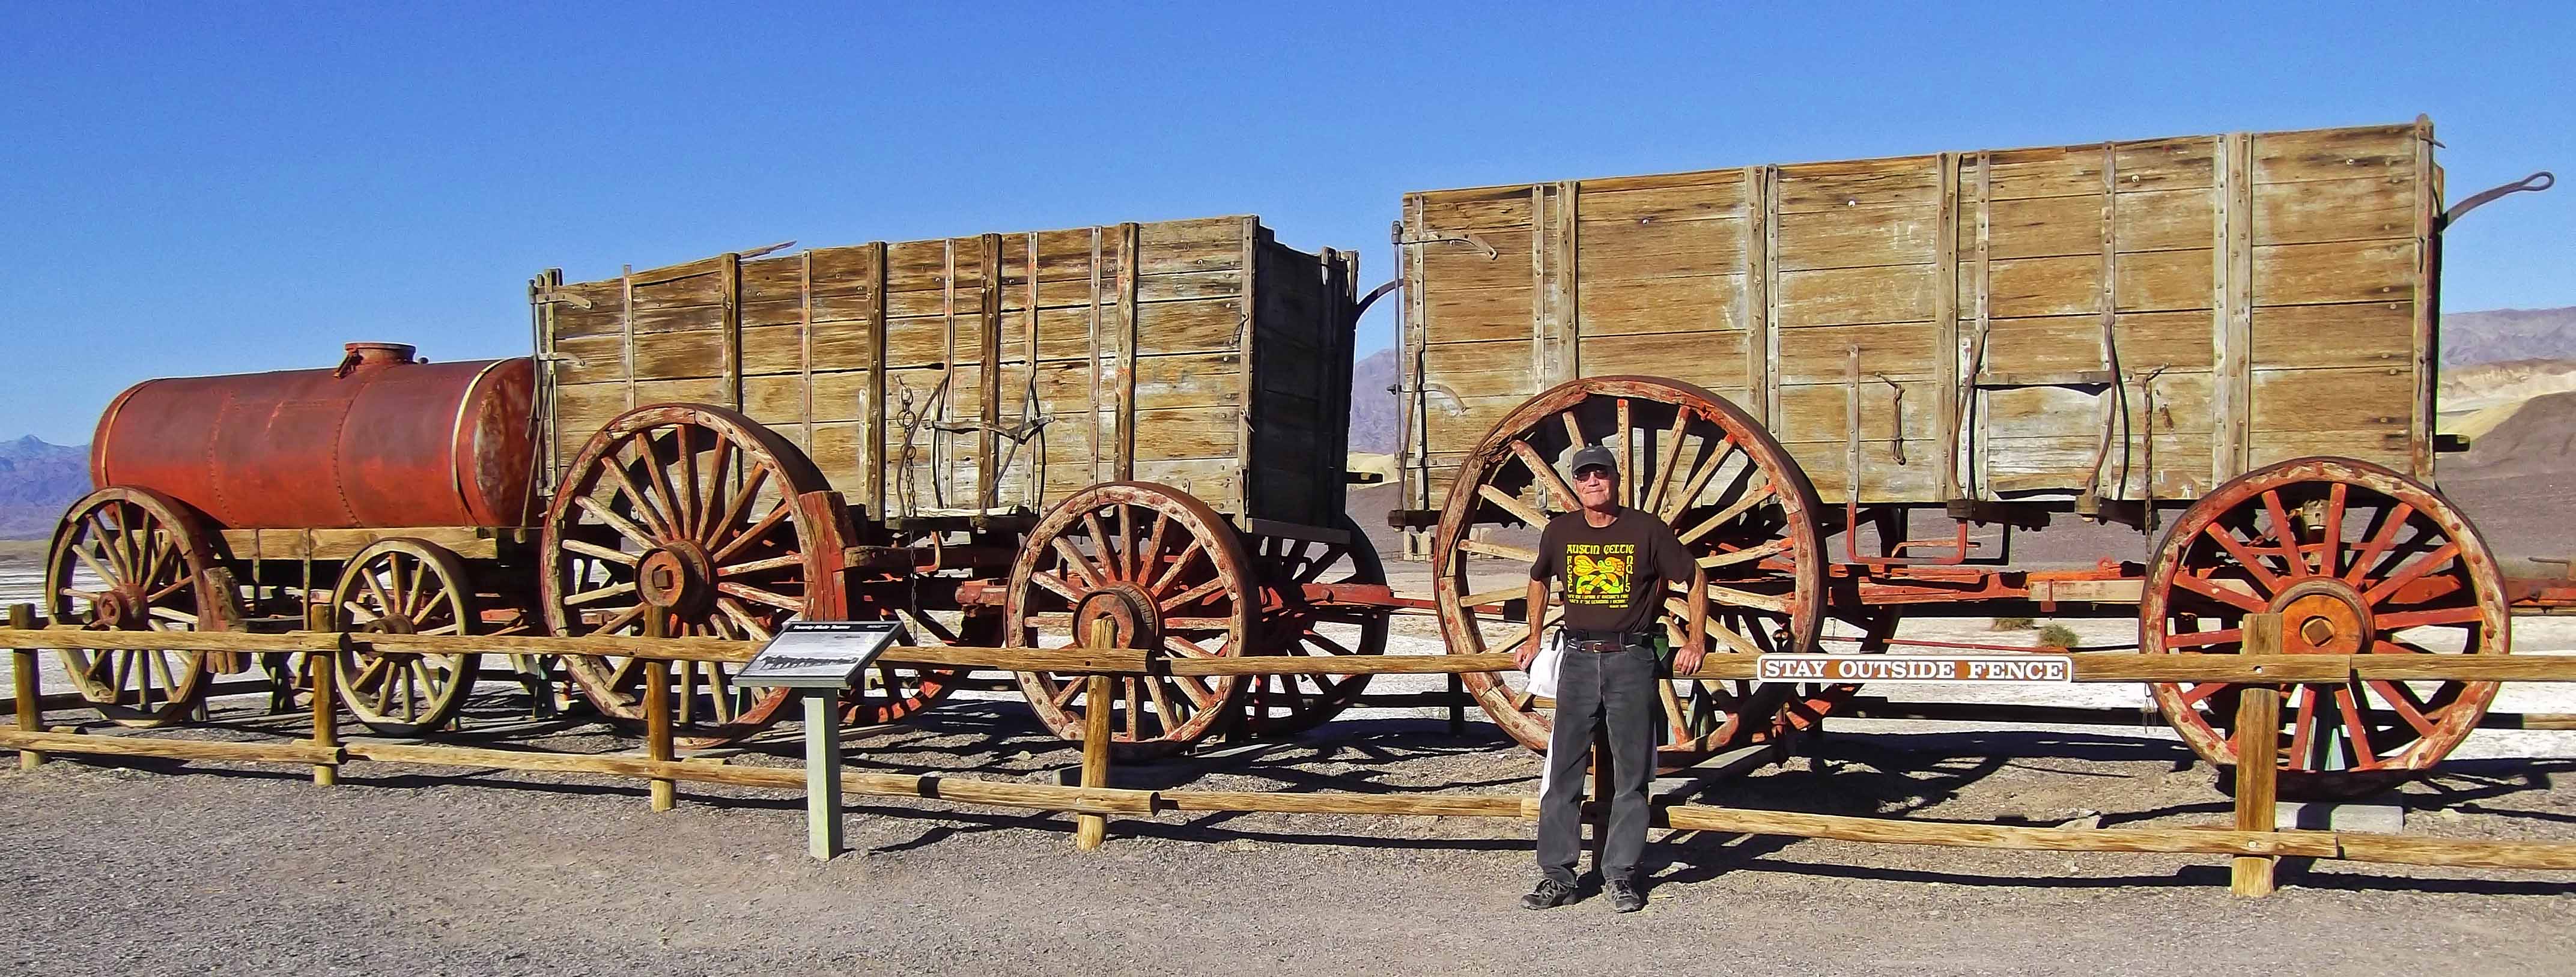 Borax wagons photo